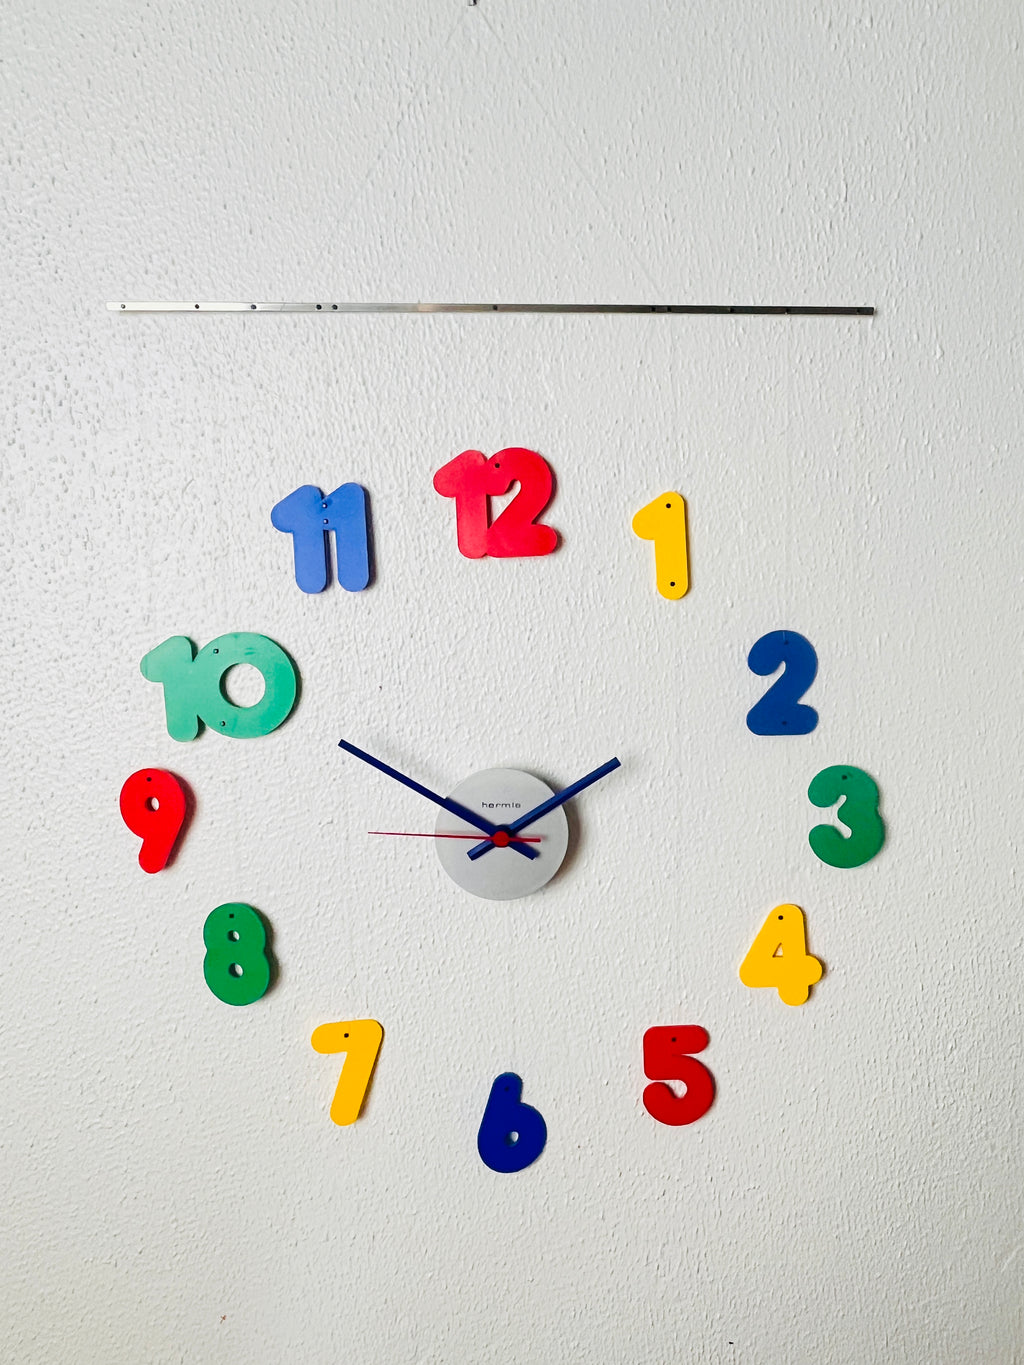 Rare Postmodern Floating Clock by Hermle